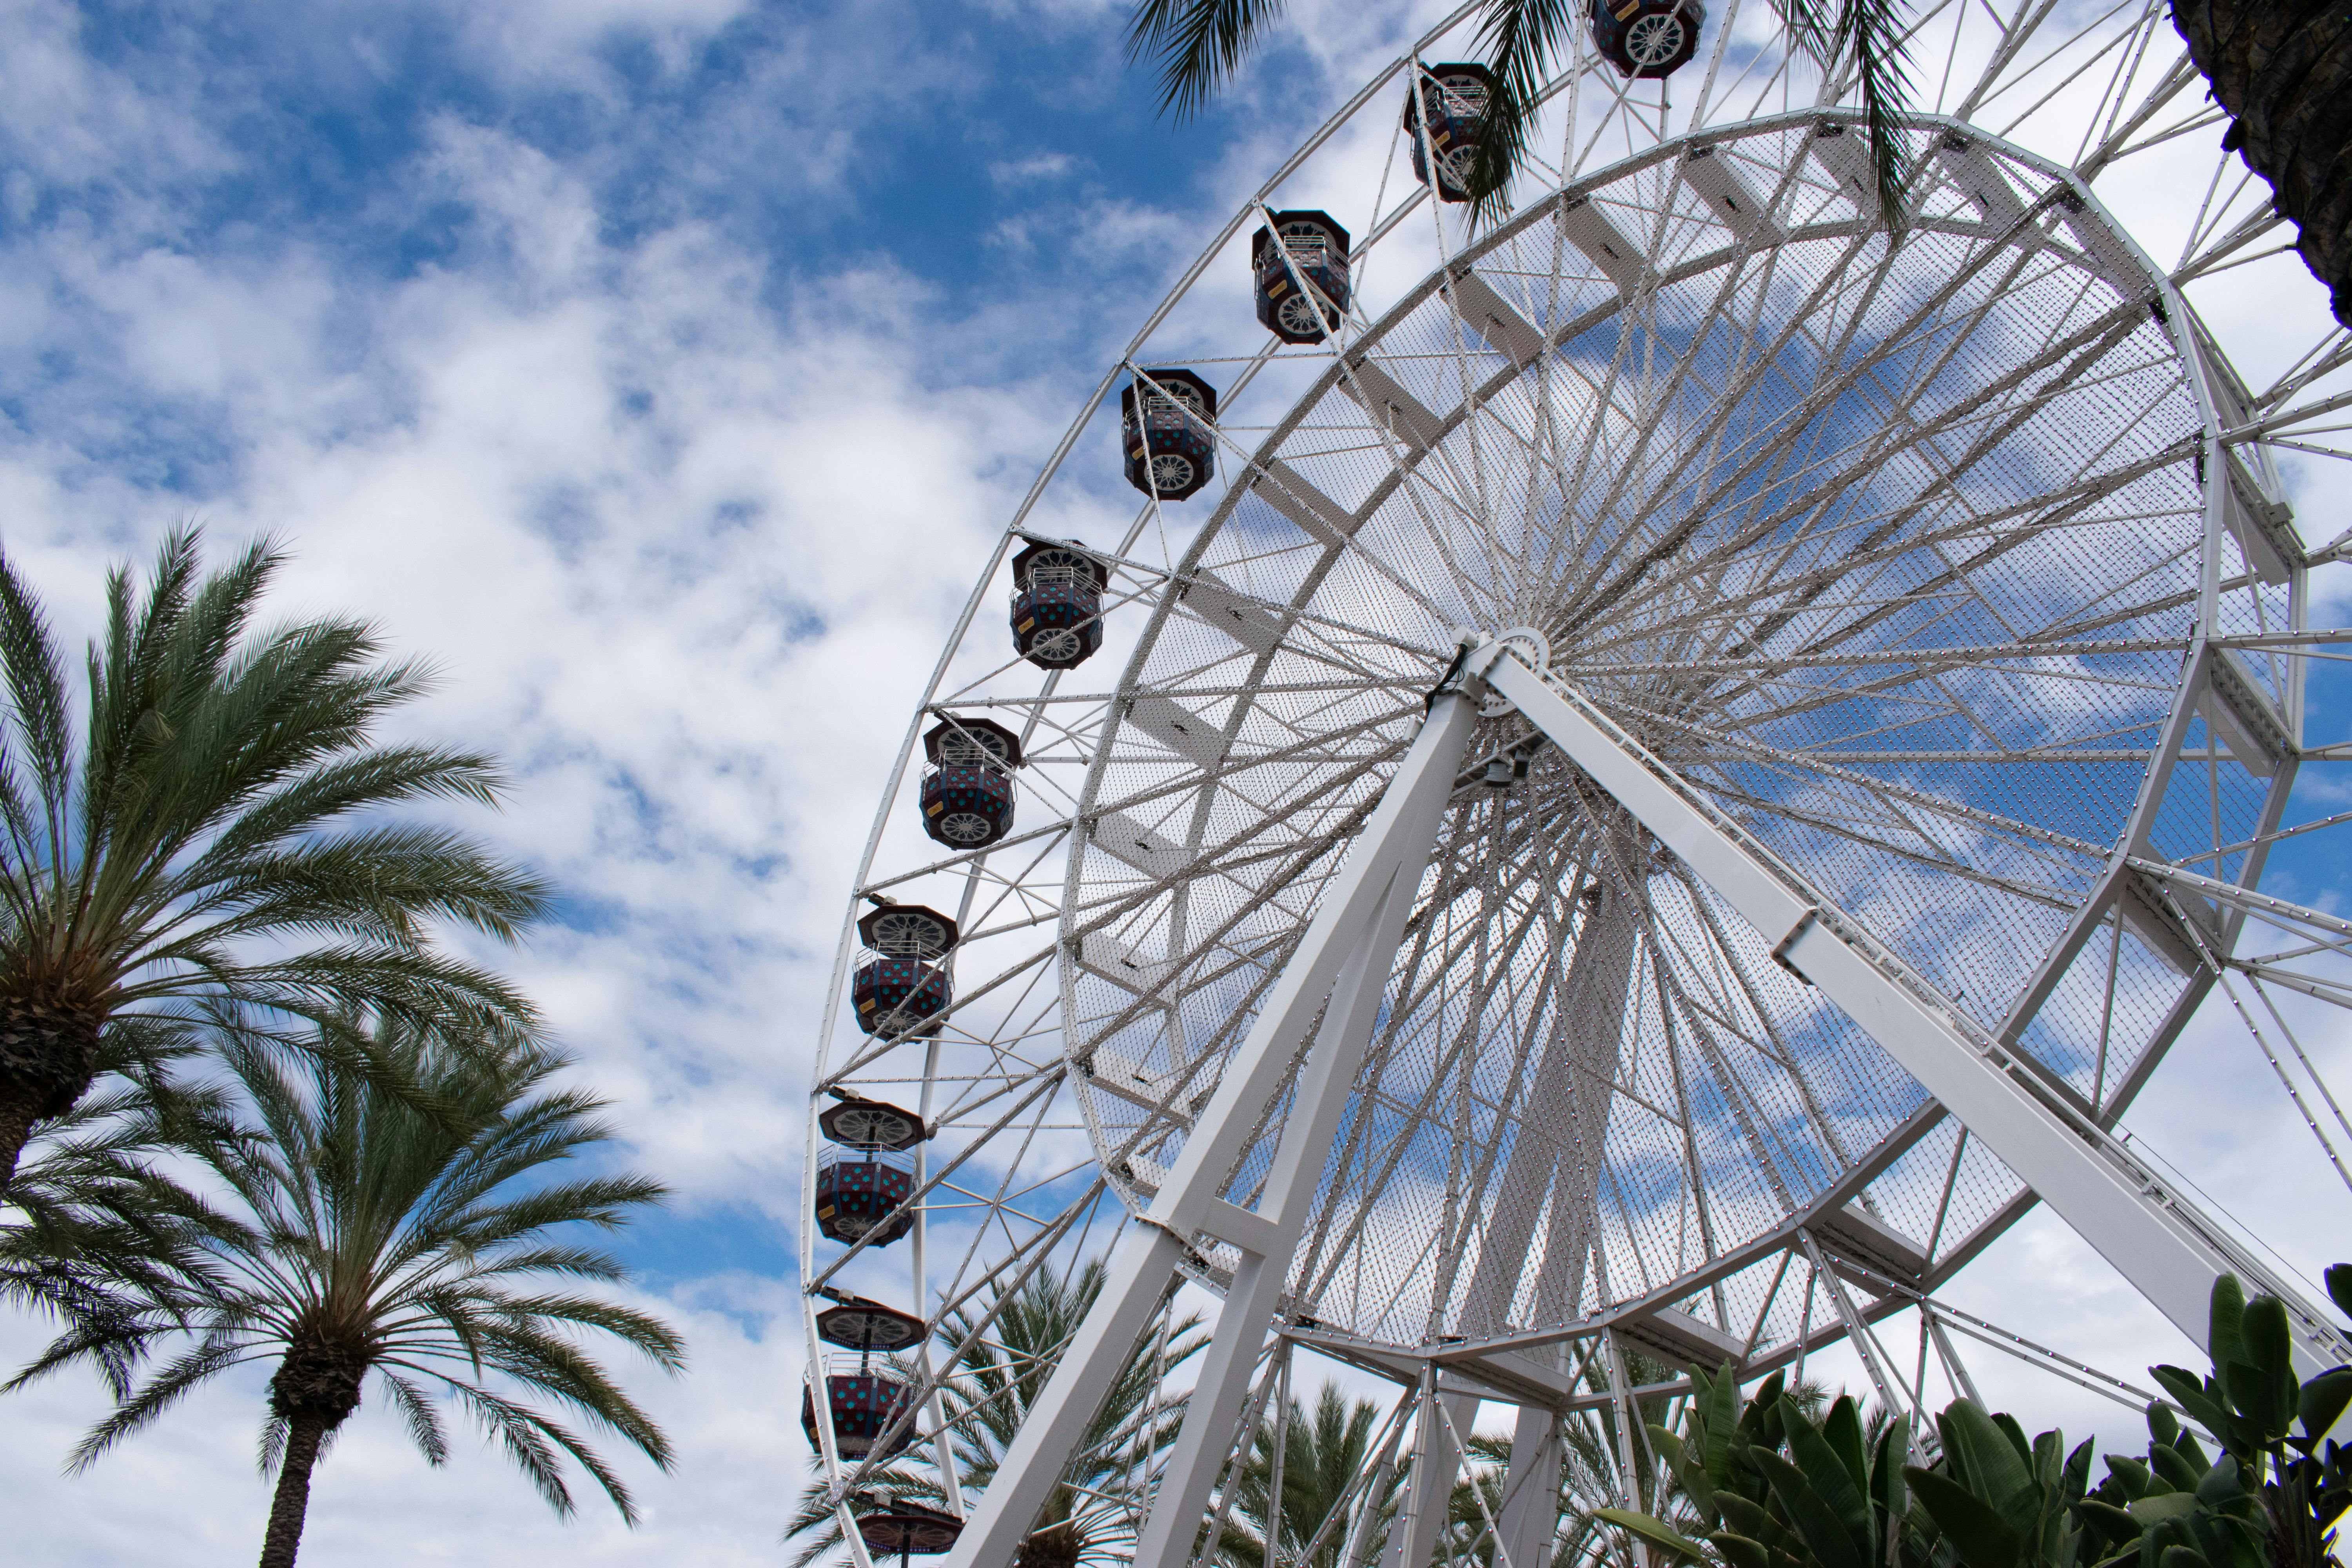 Free stock photo of ferris wheel, outdoor mall, palm tree